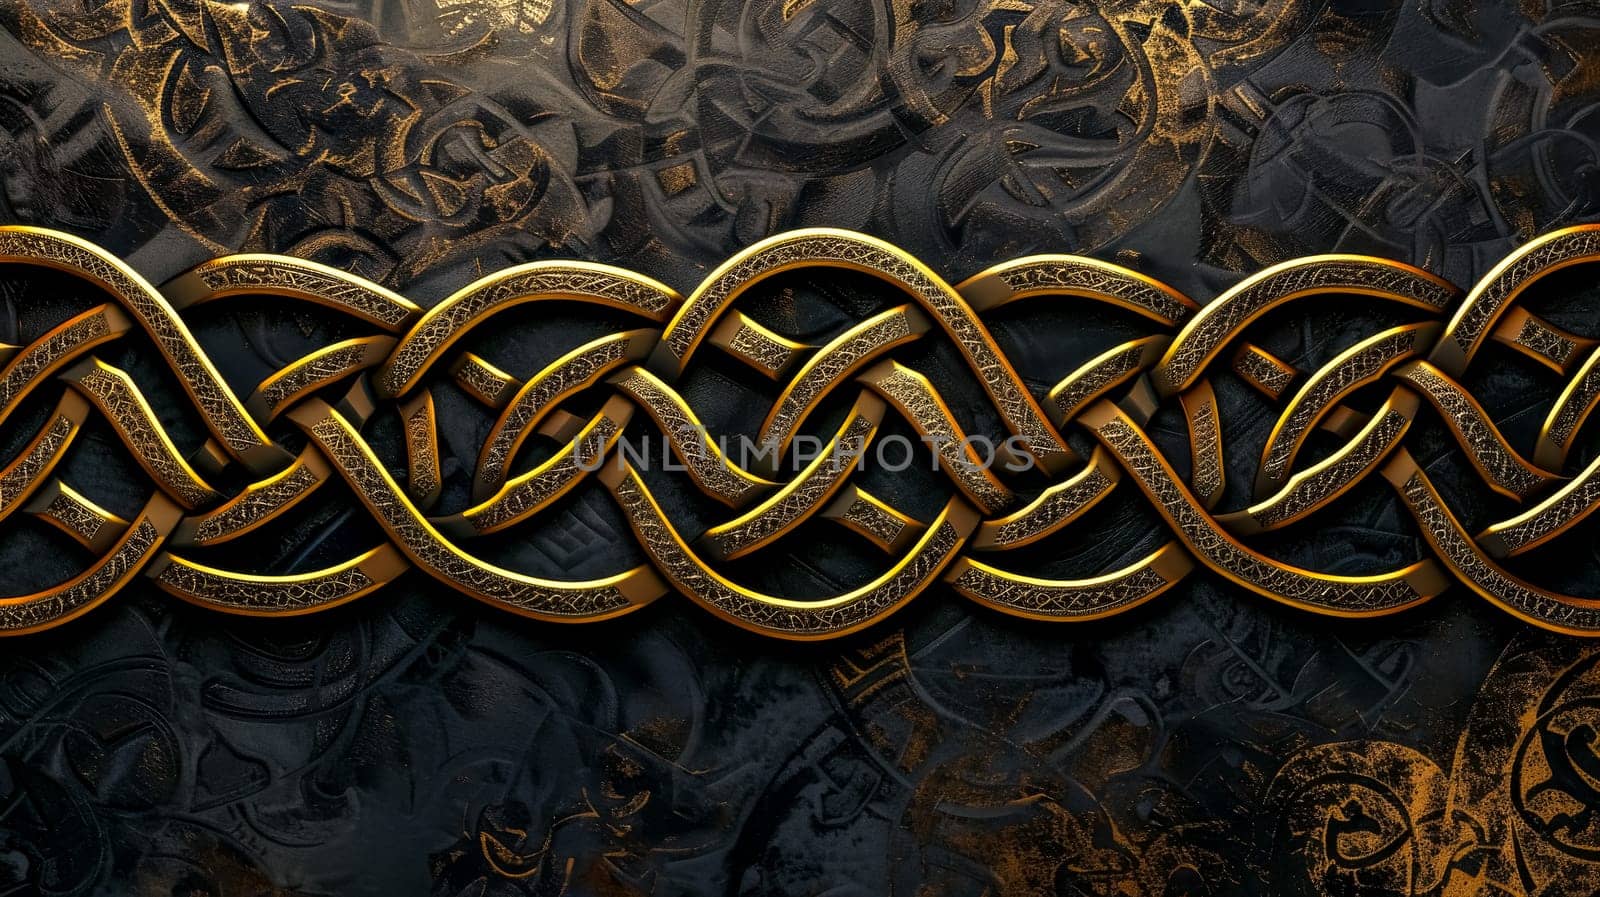 Ornate celtic knot design on dark textured background by Edophoto